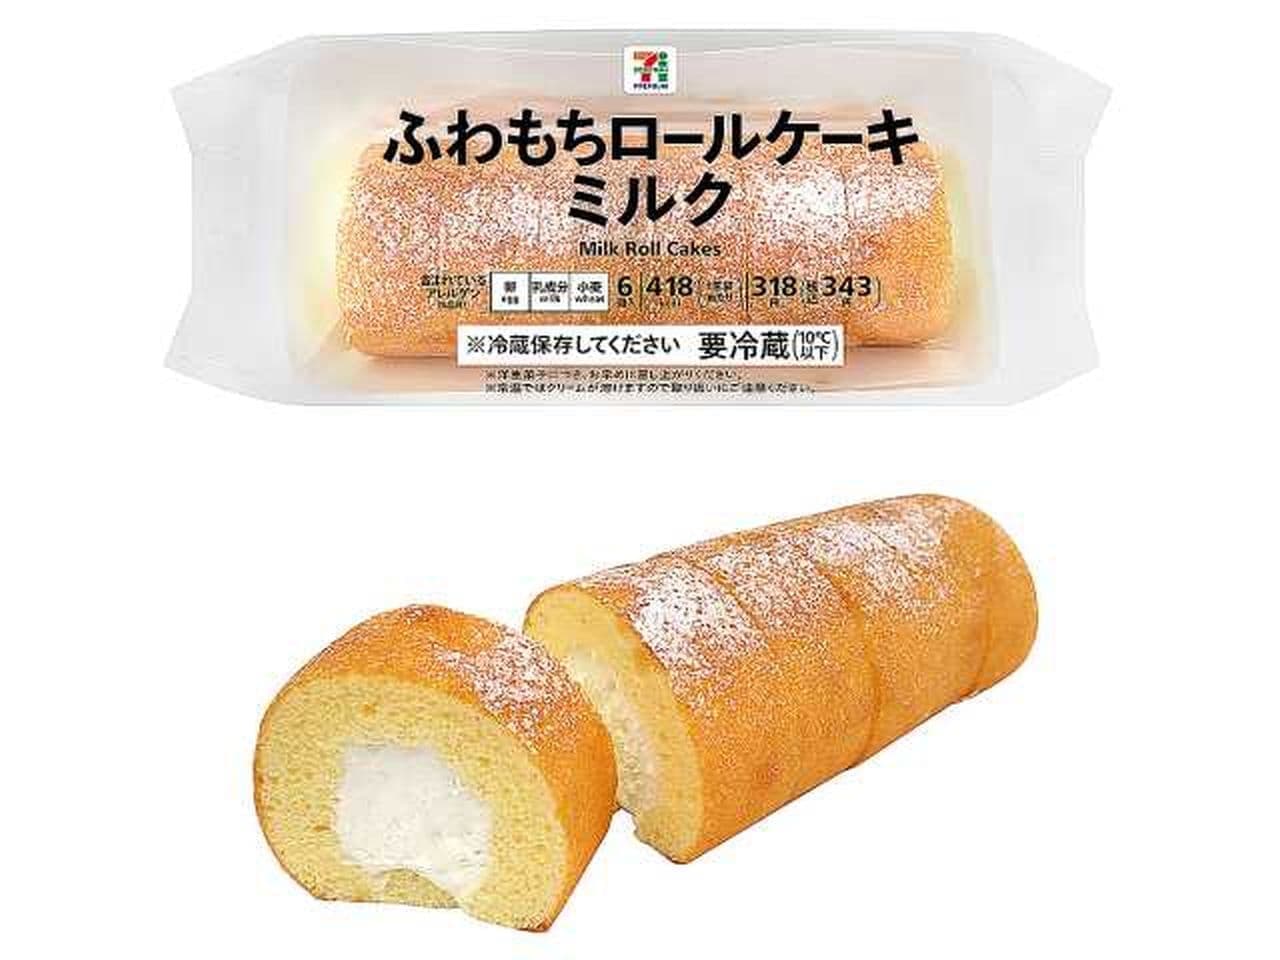 7Premium Fuwamochi Roll Cake Milk